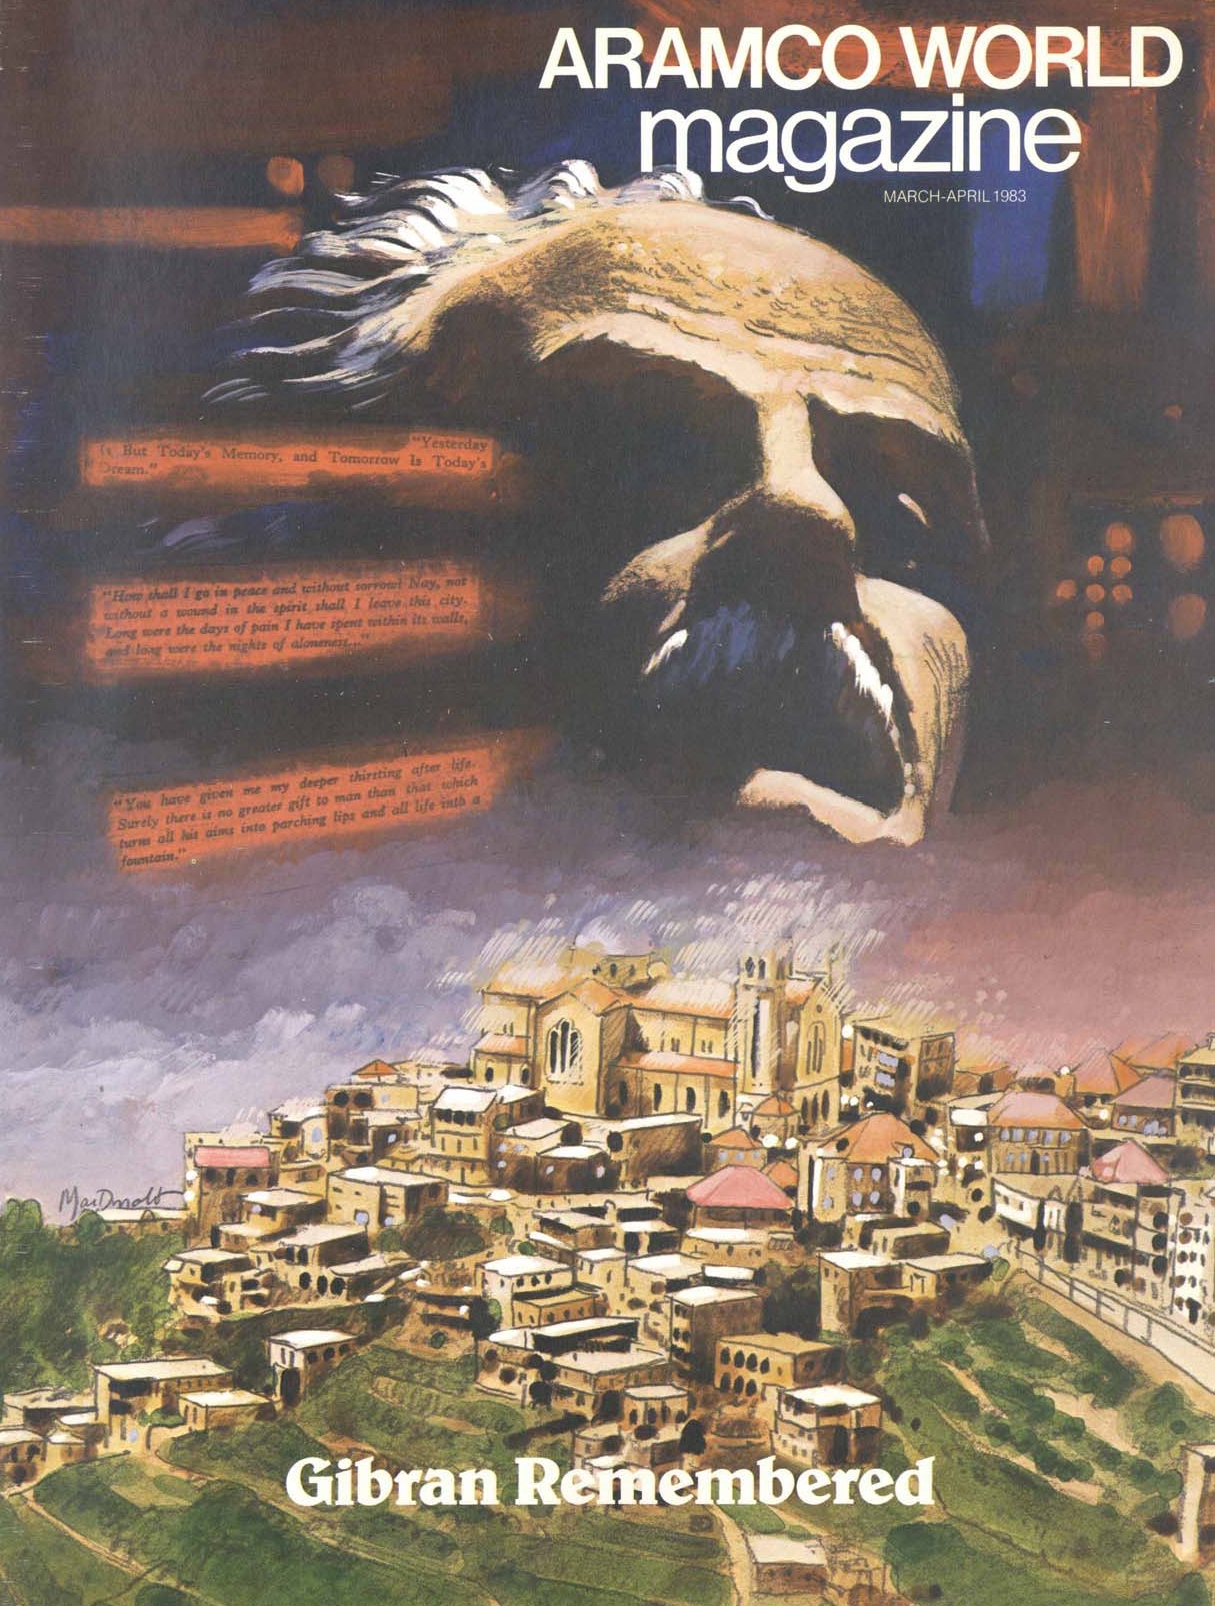 Gibran Remembered, Aramco World Magazine, March-April 1983.